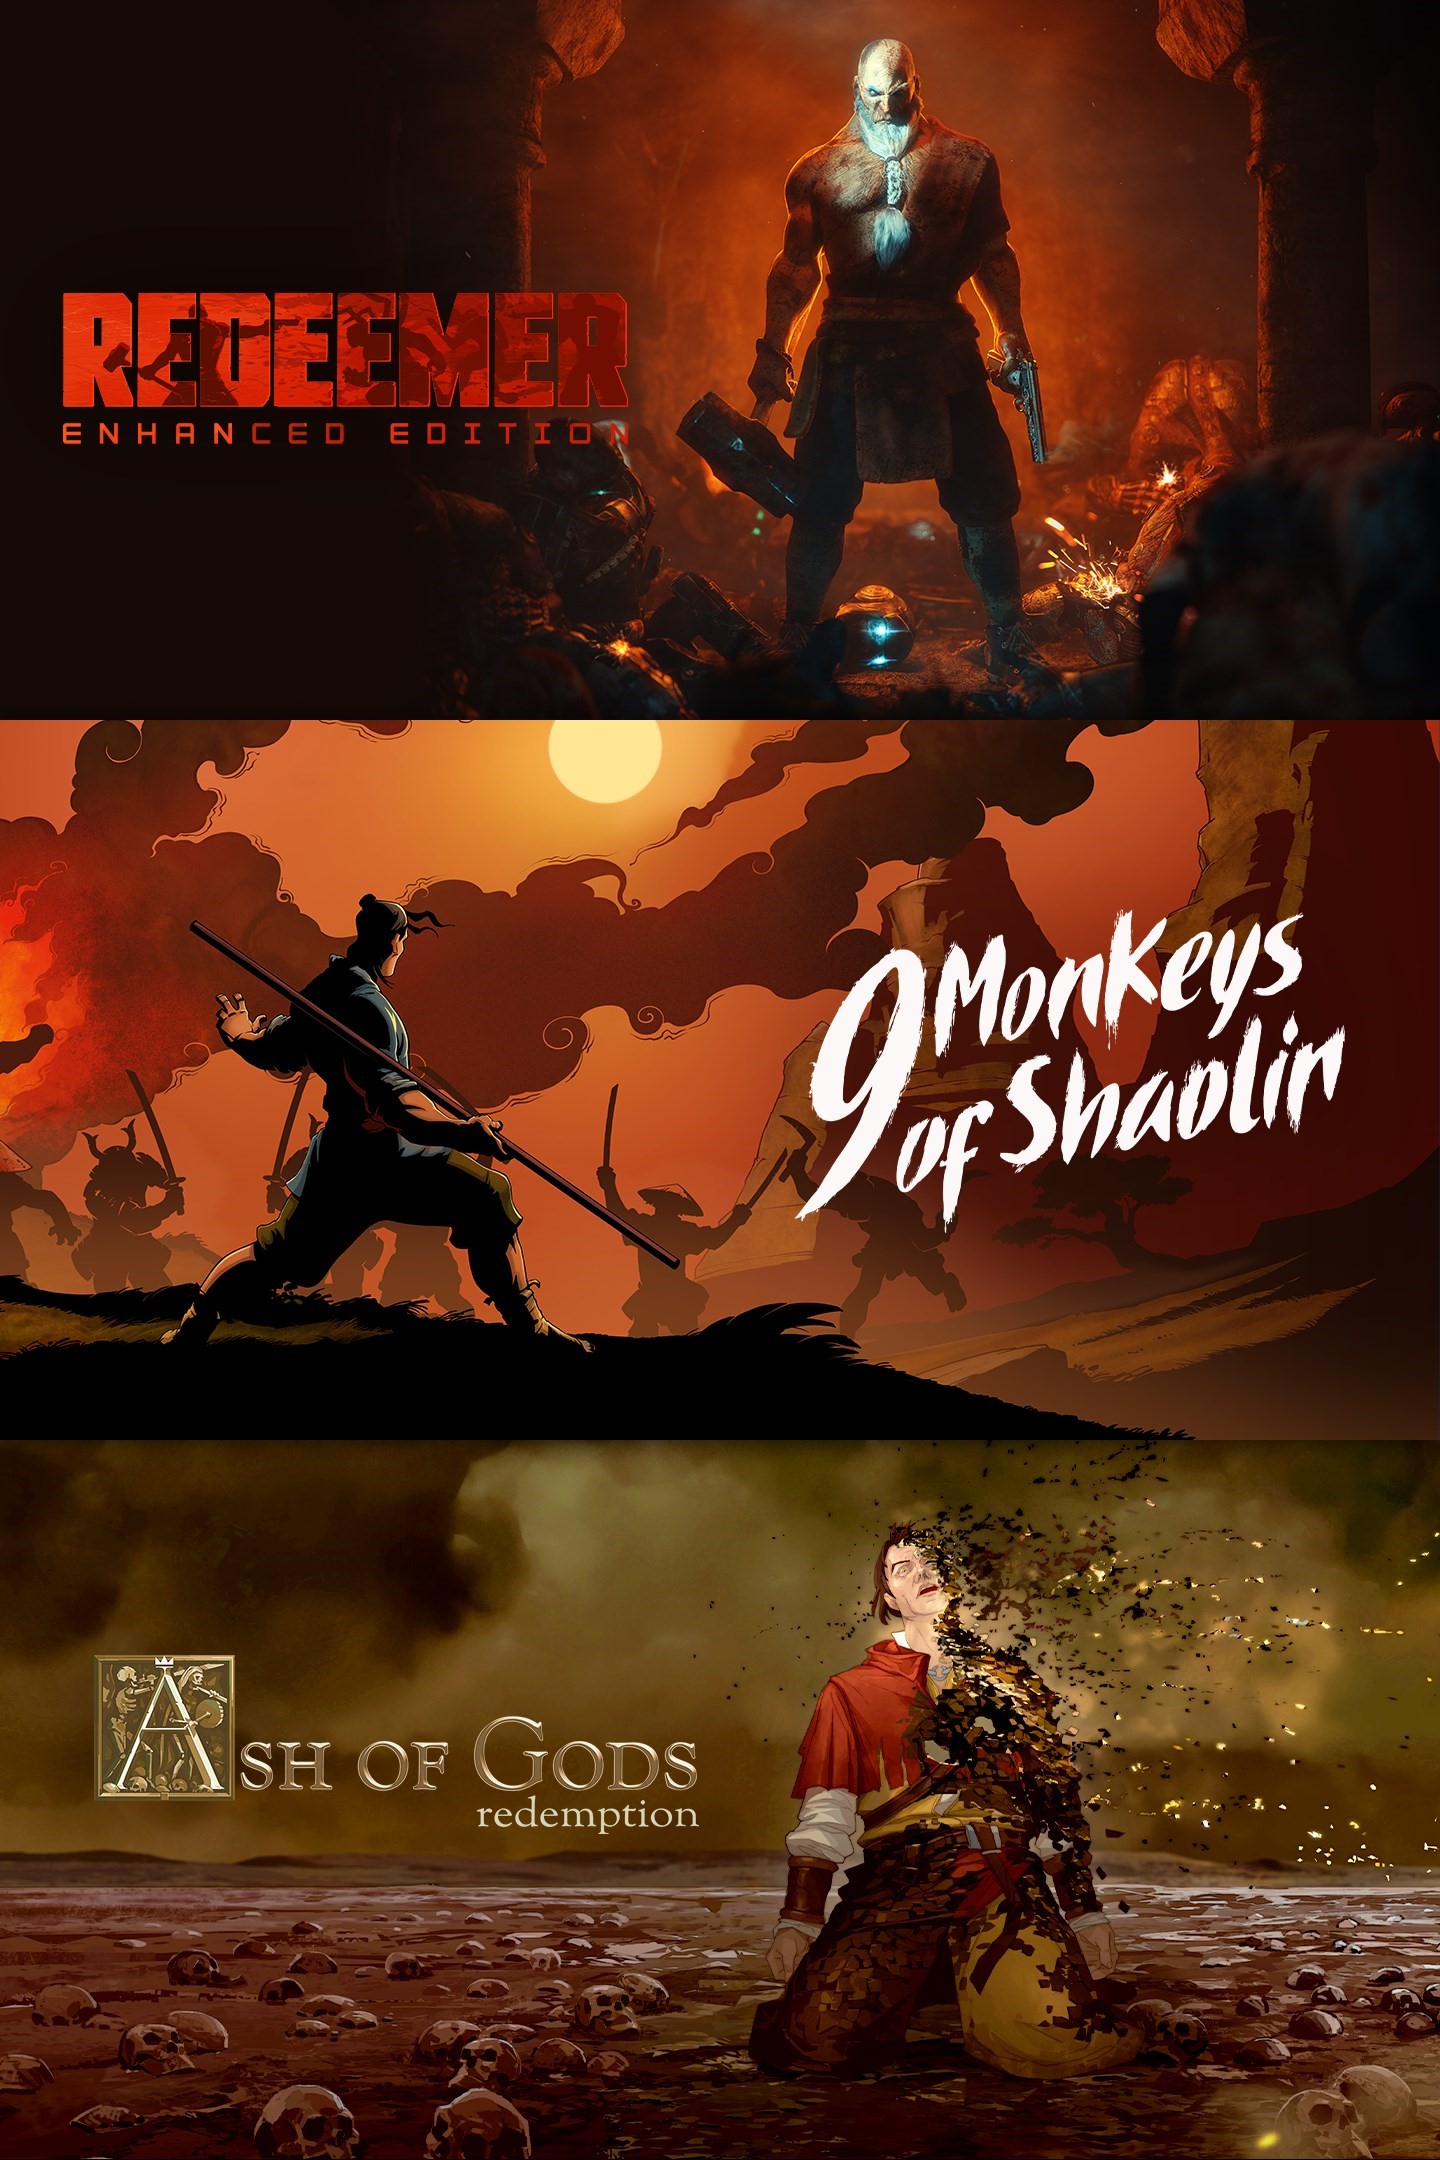 9 Monkeys of Shaolin + Ash of Gods + Redeemer: Bun/Xbox